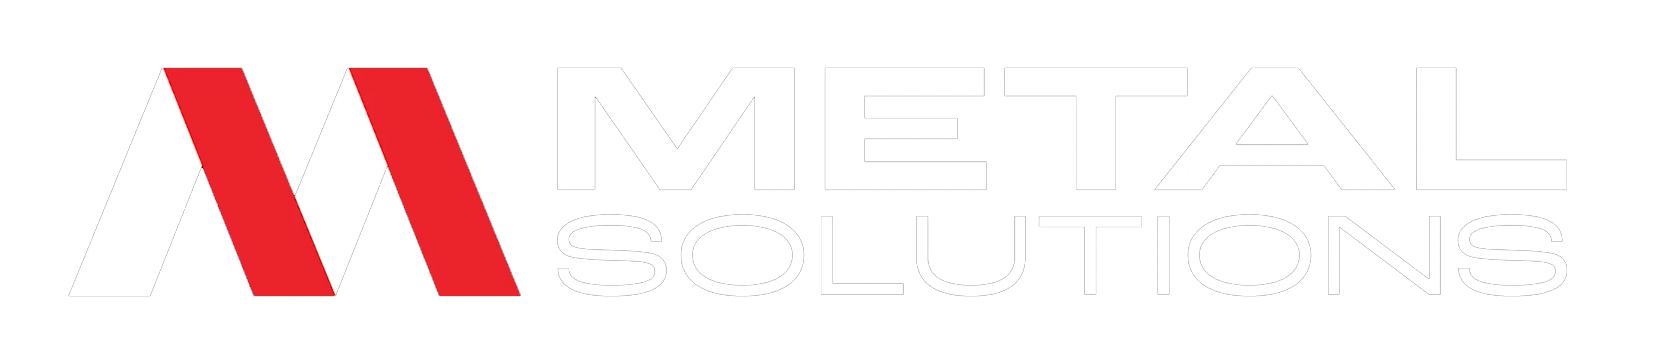 Metal Solutions